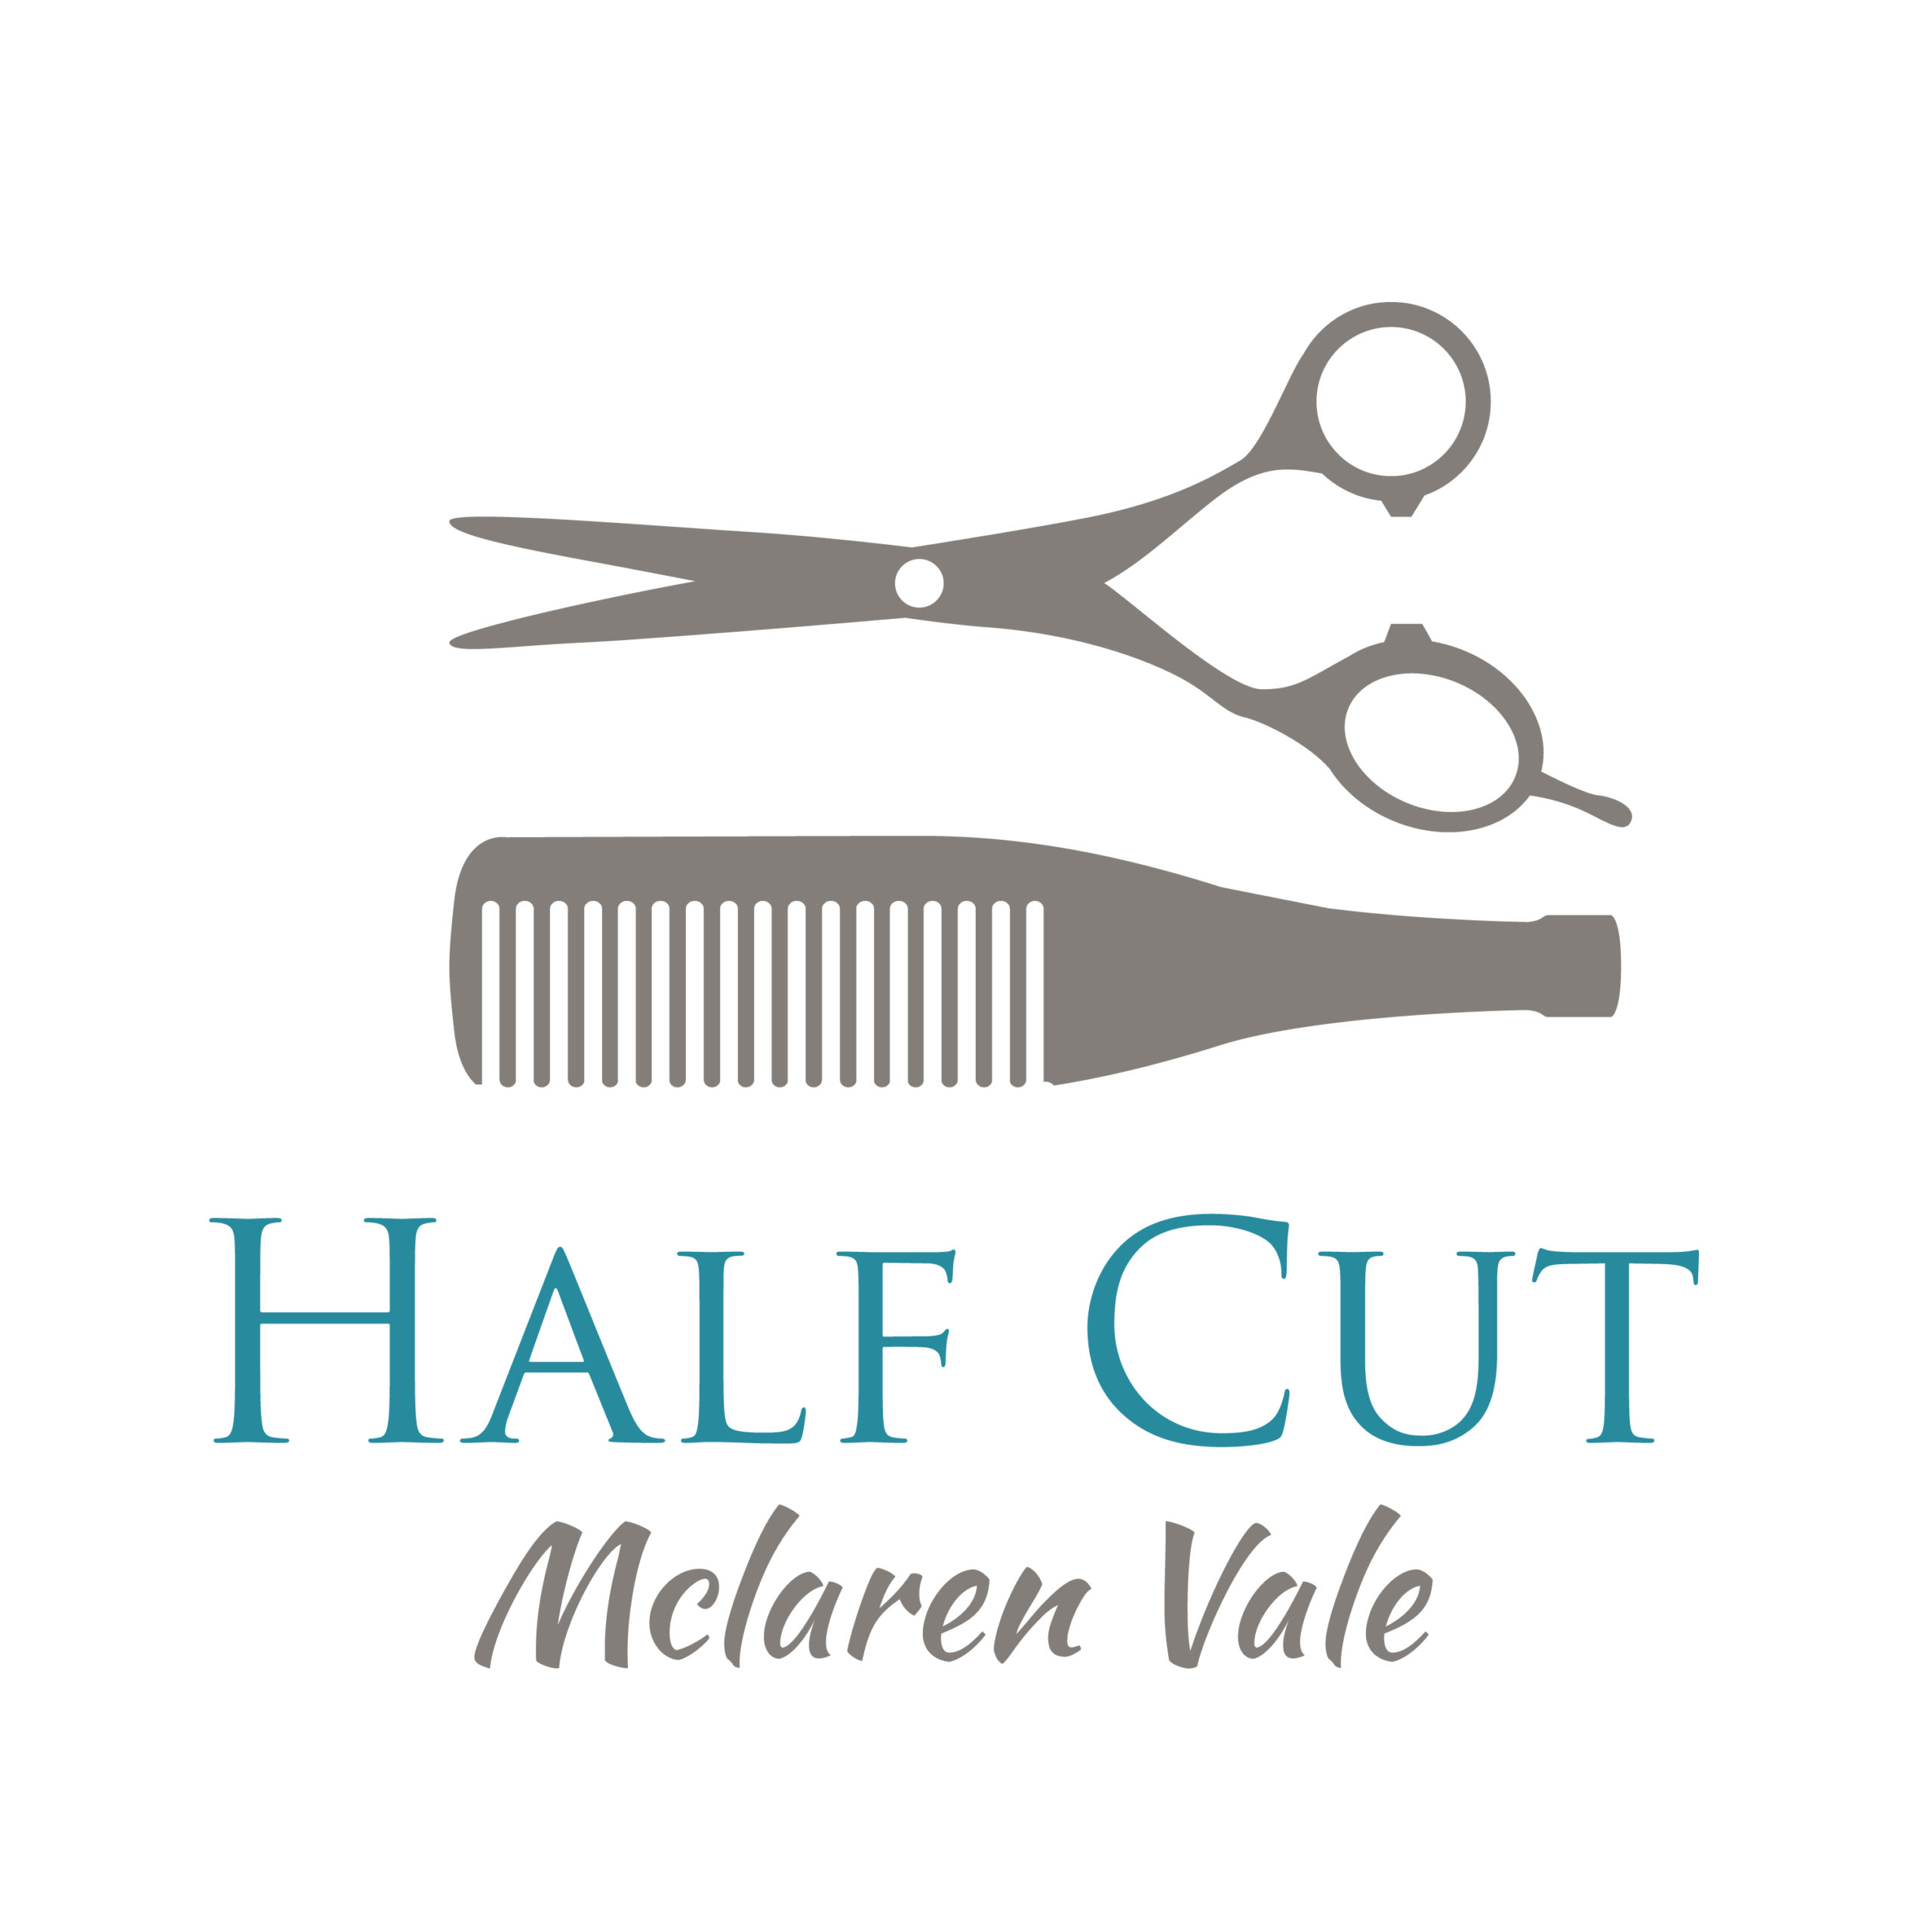 Half Cut McLaren Vale